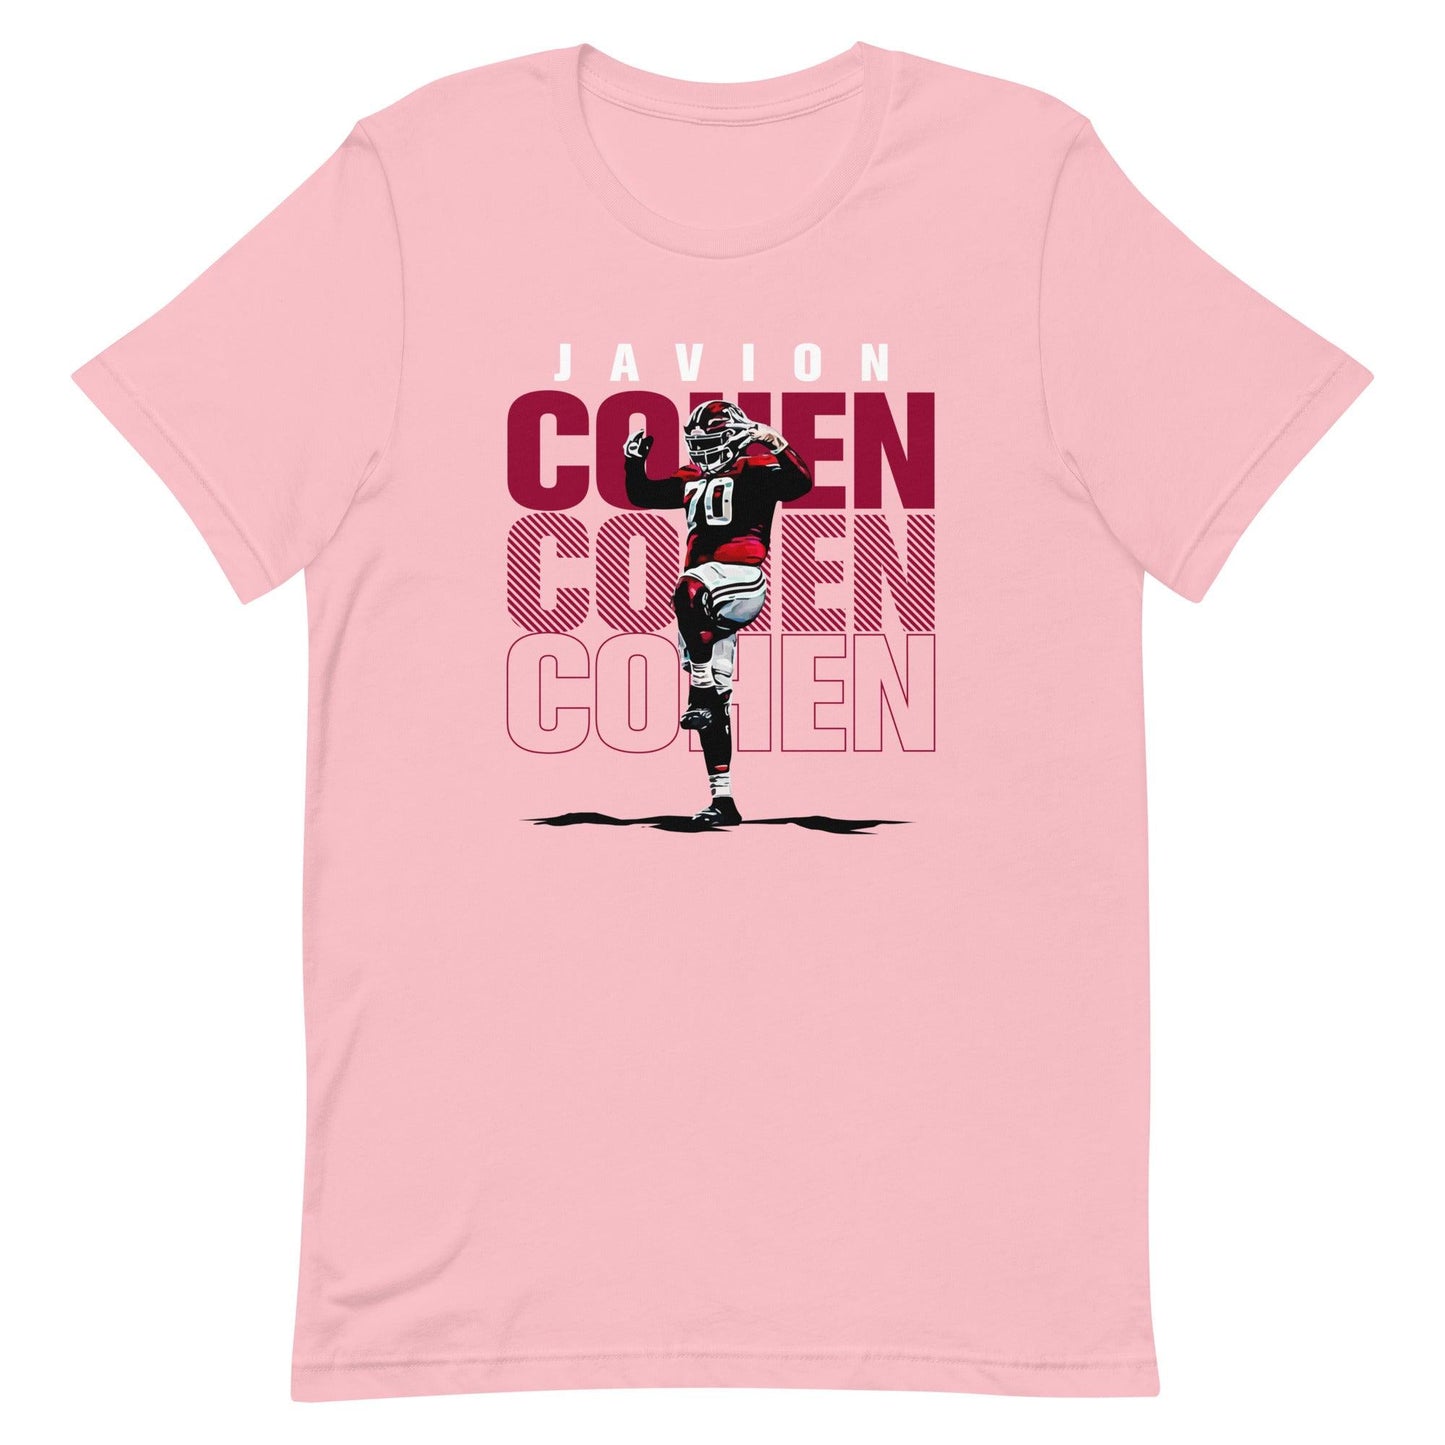 Javion Cohen "Celebrate" t-shirt - Fan Arch